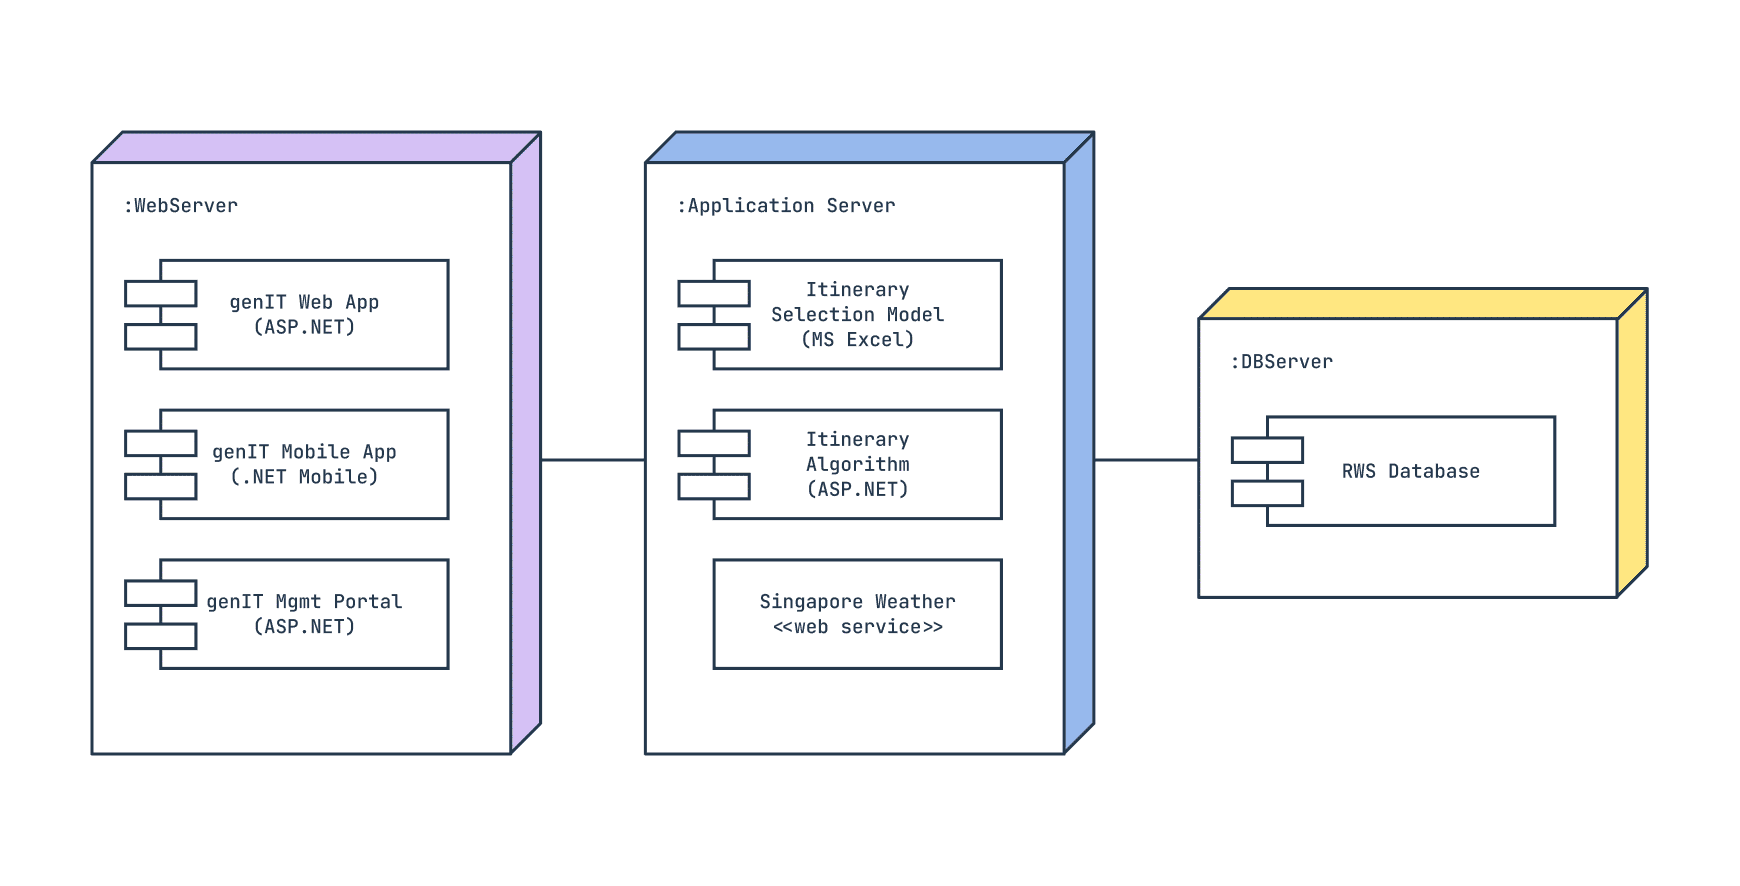 A deployment UML diagram of servers